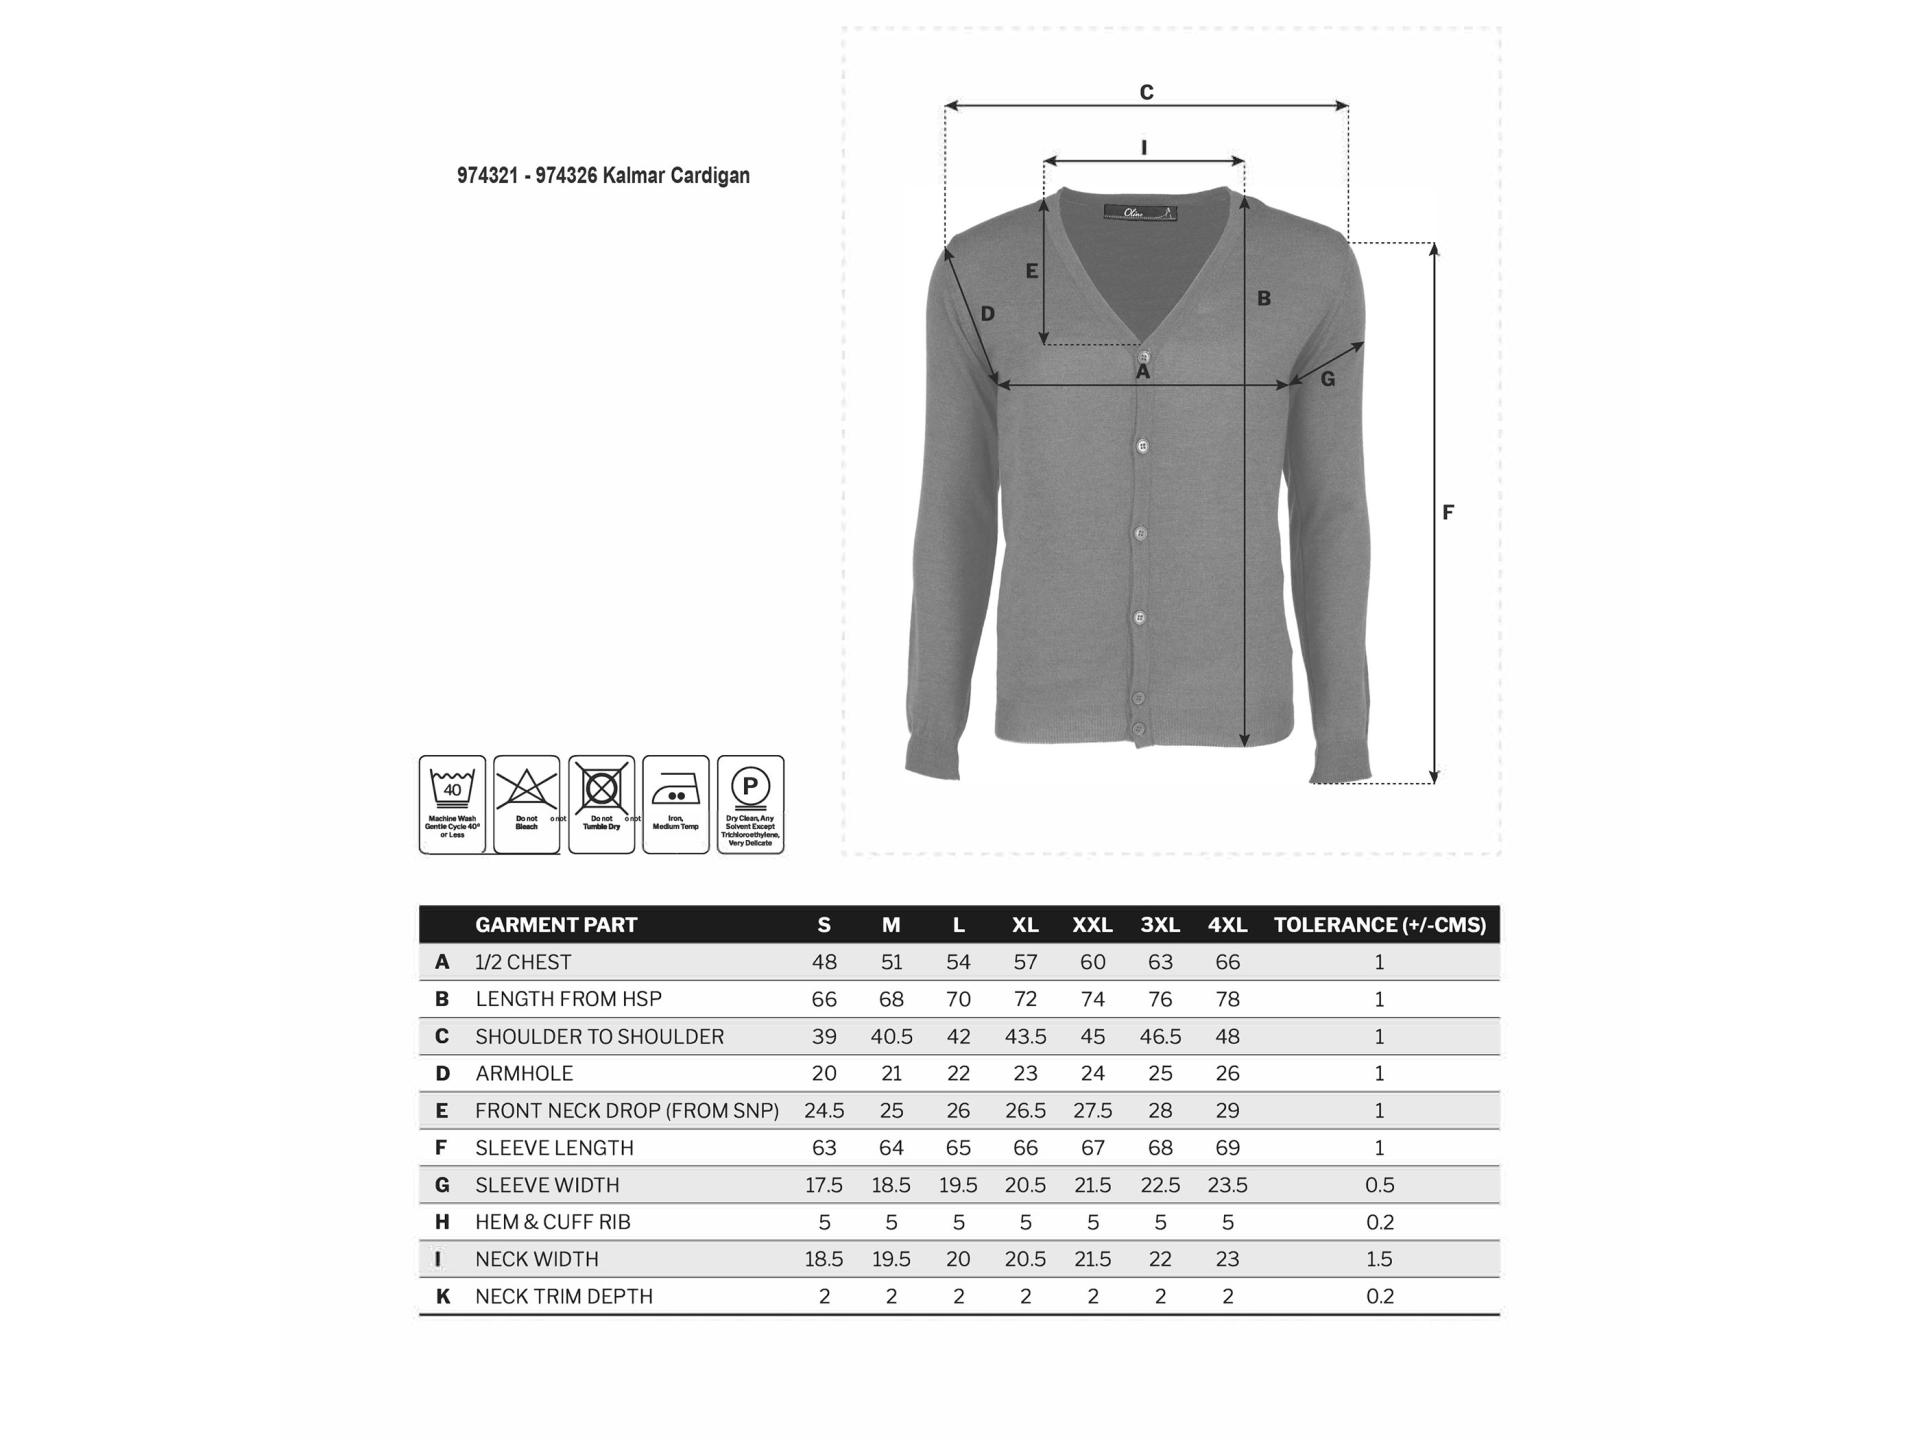 Size guide for uniform cardigan for men